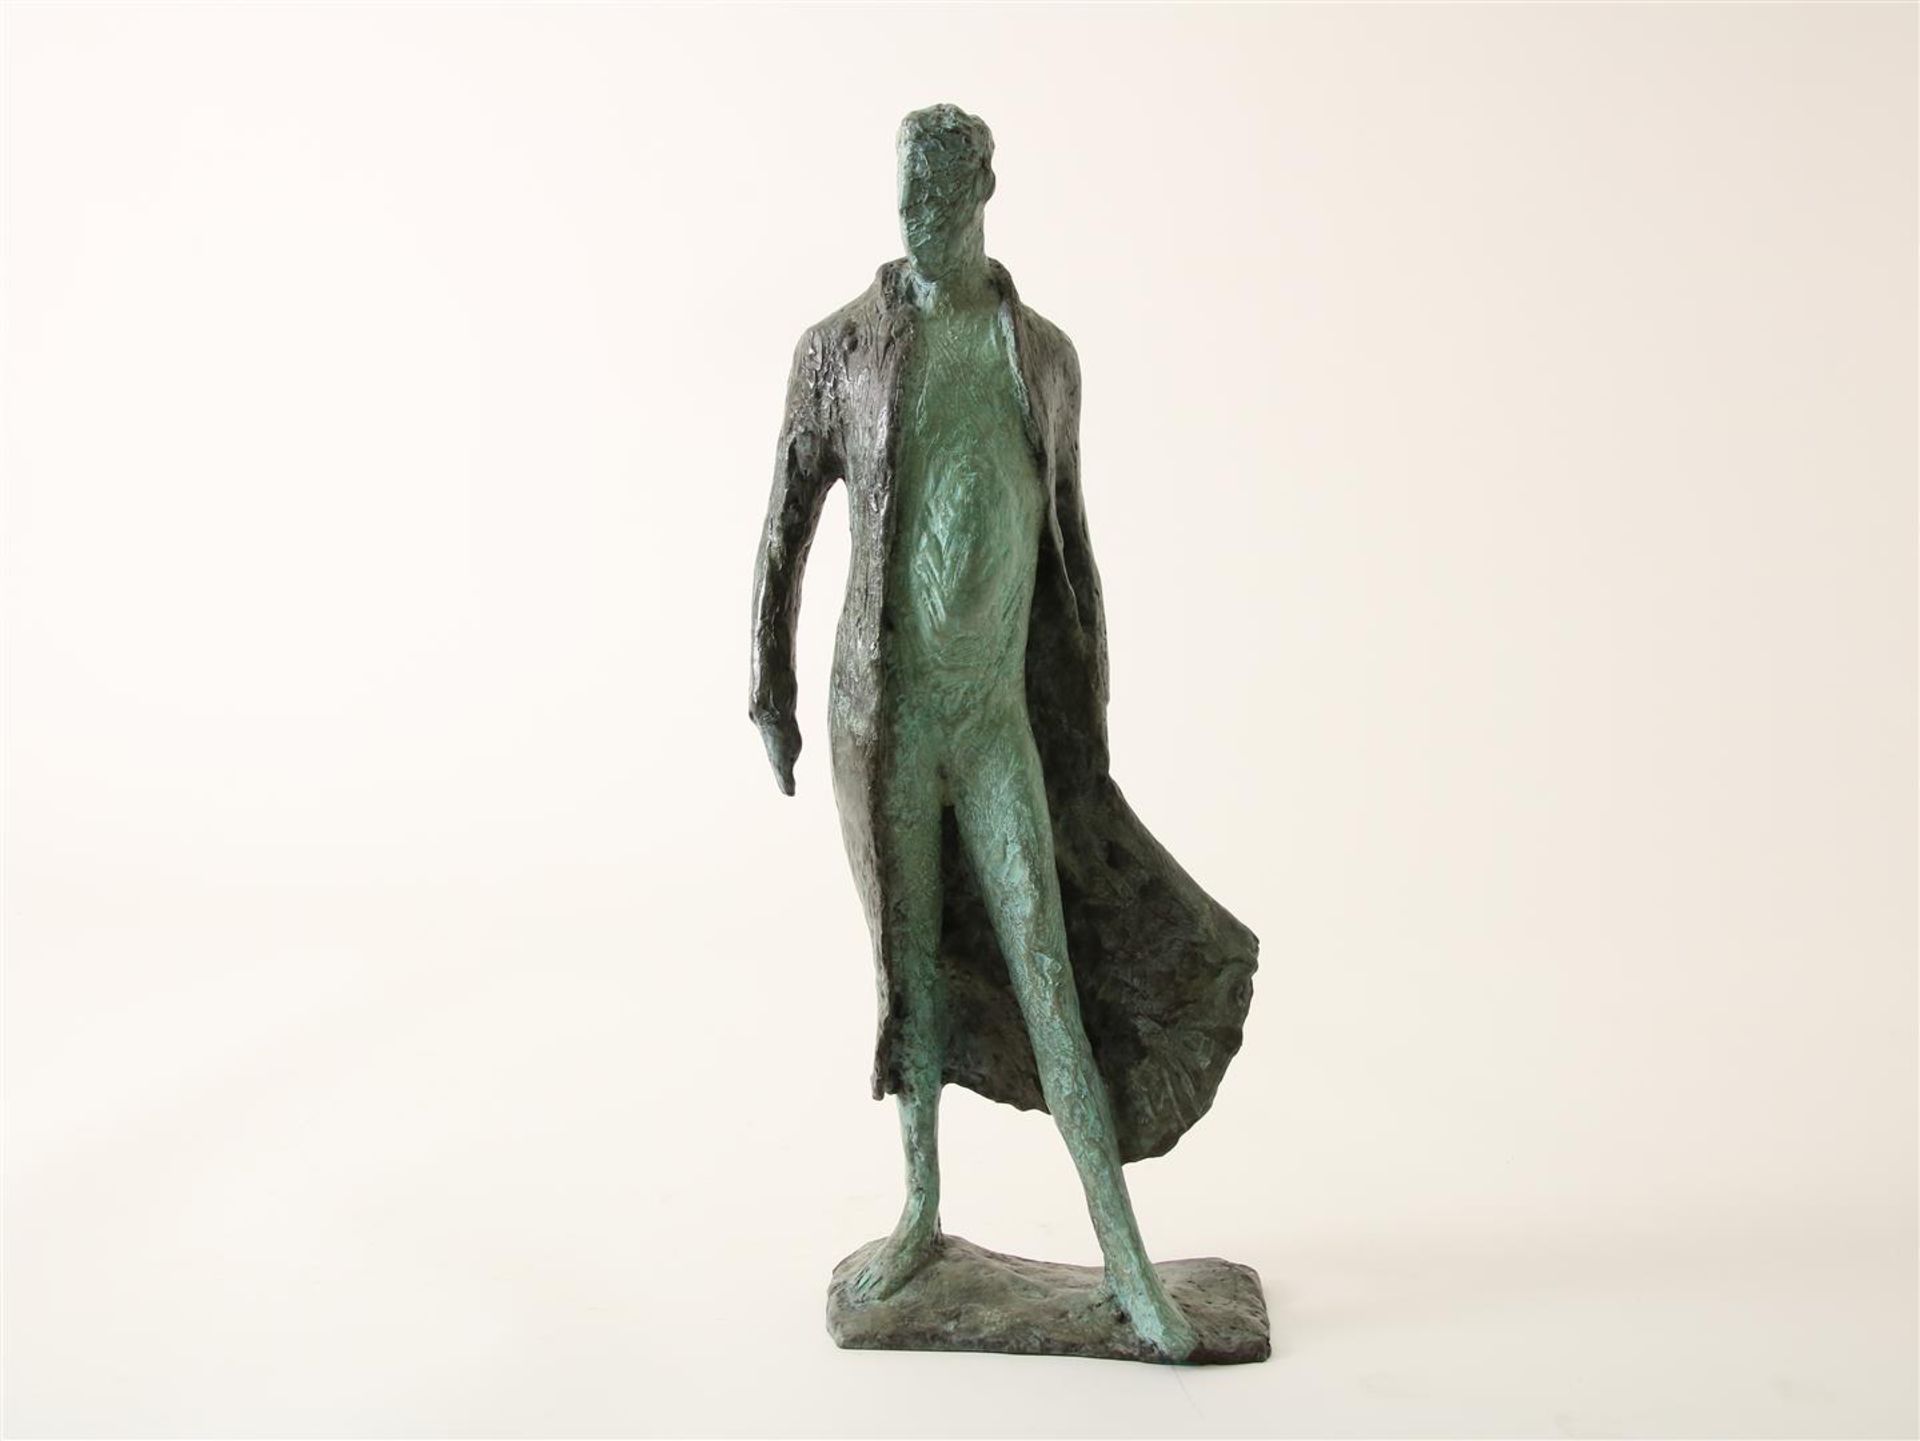 Saskia Pfaeltzer (1955-) 'The Watchman', bronze sculpture commissioned by International